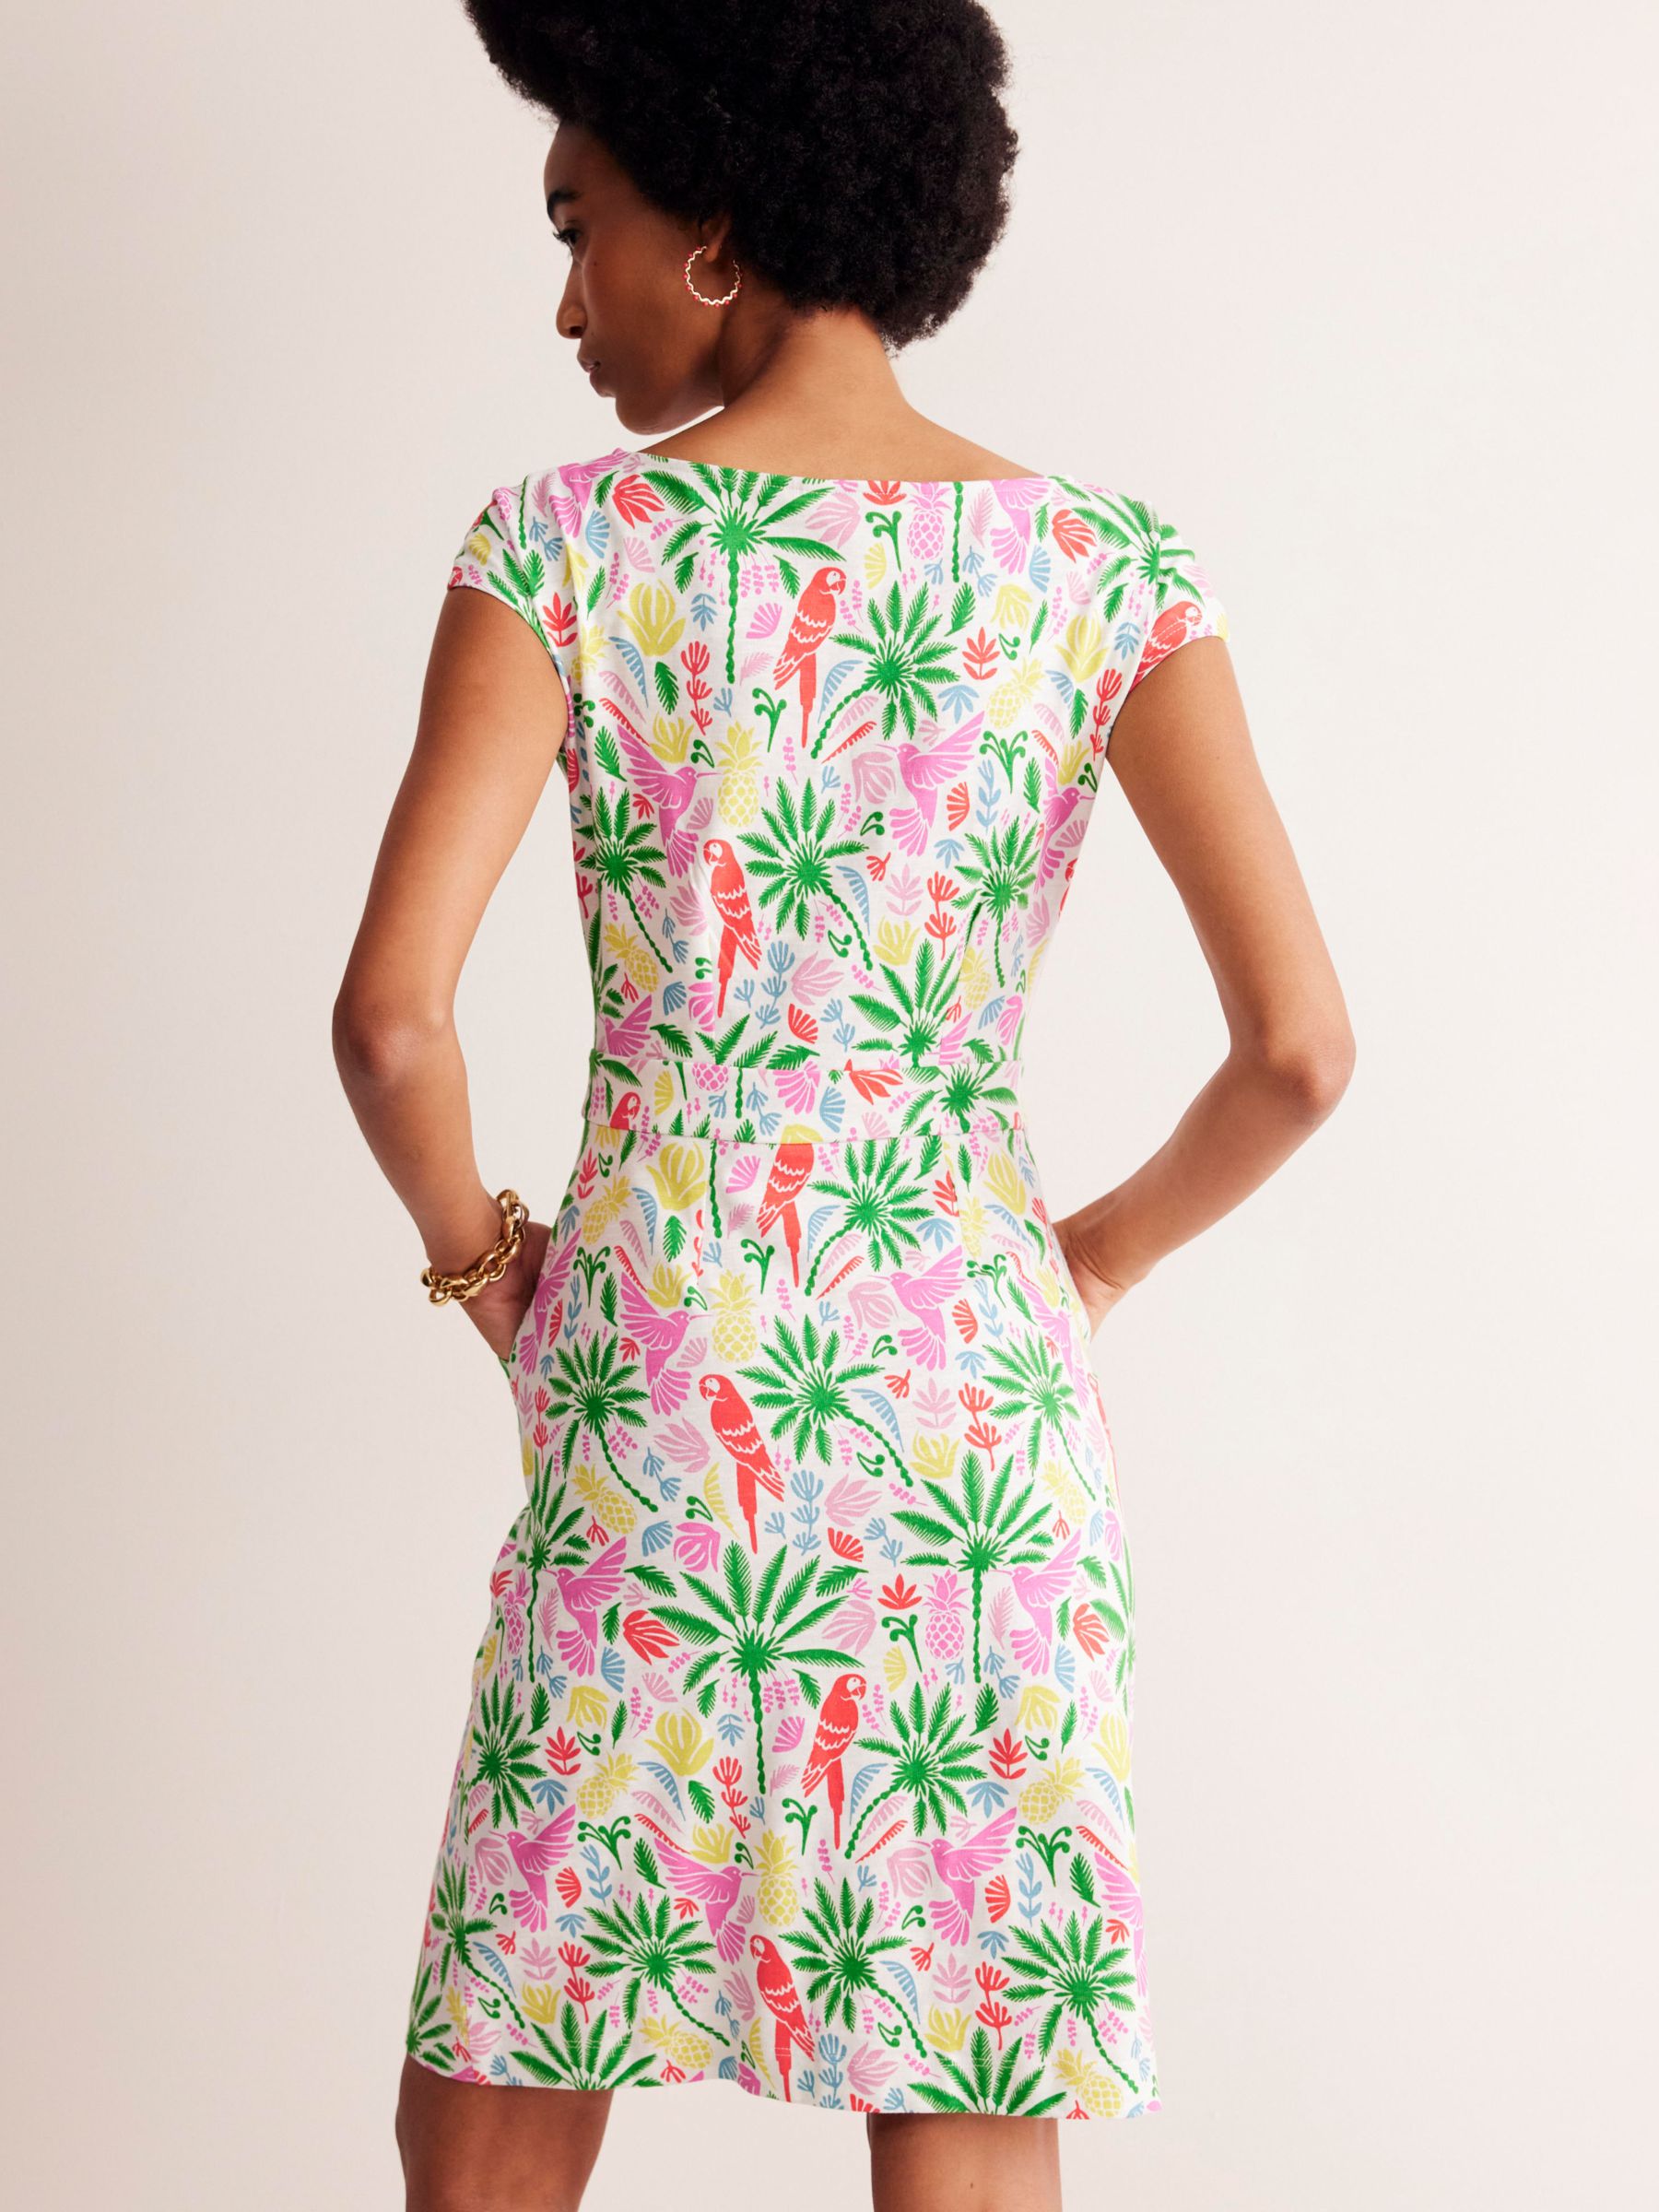 Boden Florrie Tropical Paradise Floral Jersey Dress, Multi, 8